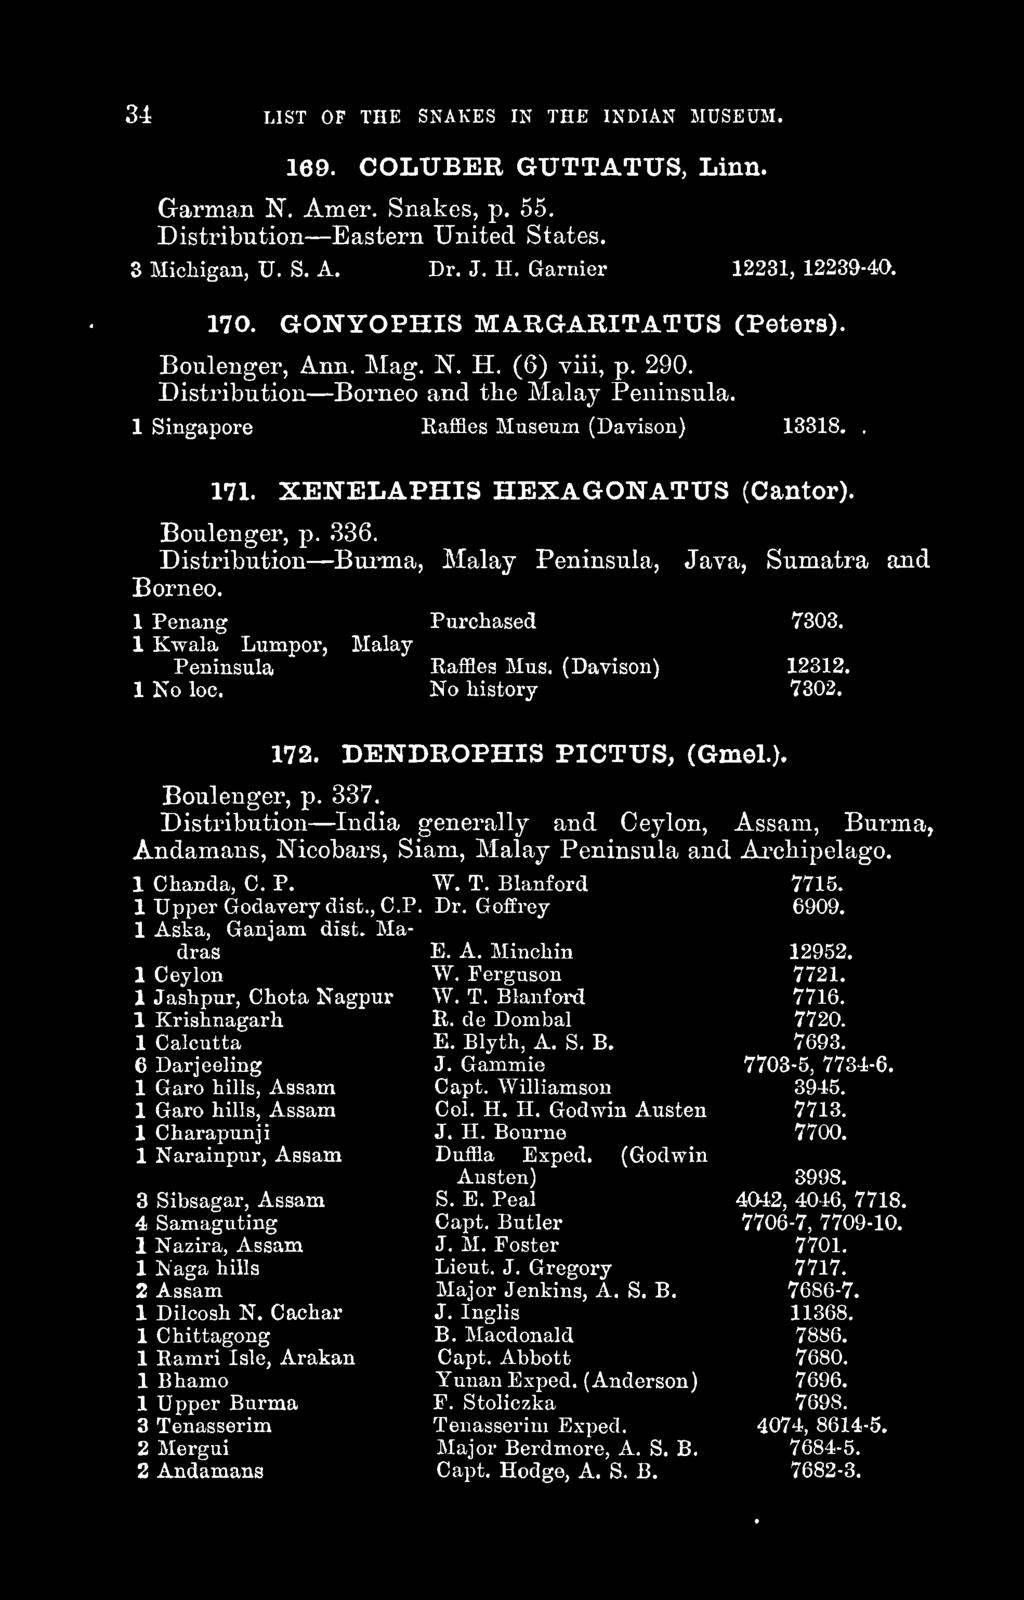 XENELAPHIS HEXAGONATUS (Cantor). Boulenger, p..336. Distribution Burma, Malay Peninsula, Java, Sumatra and Borneo. 1 Penang Purchased 7303. 1 Kwala Lumpor, Malay Peninsula Eaffles Mus.